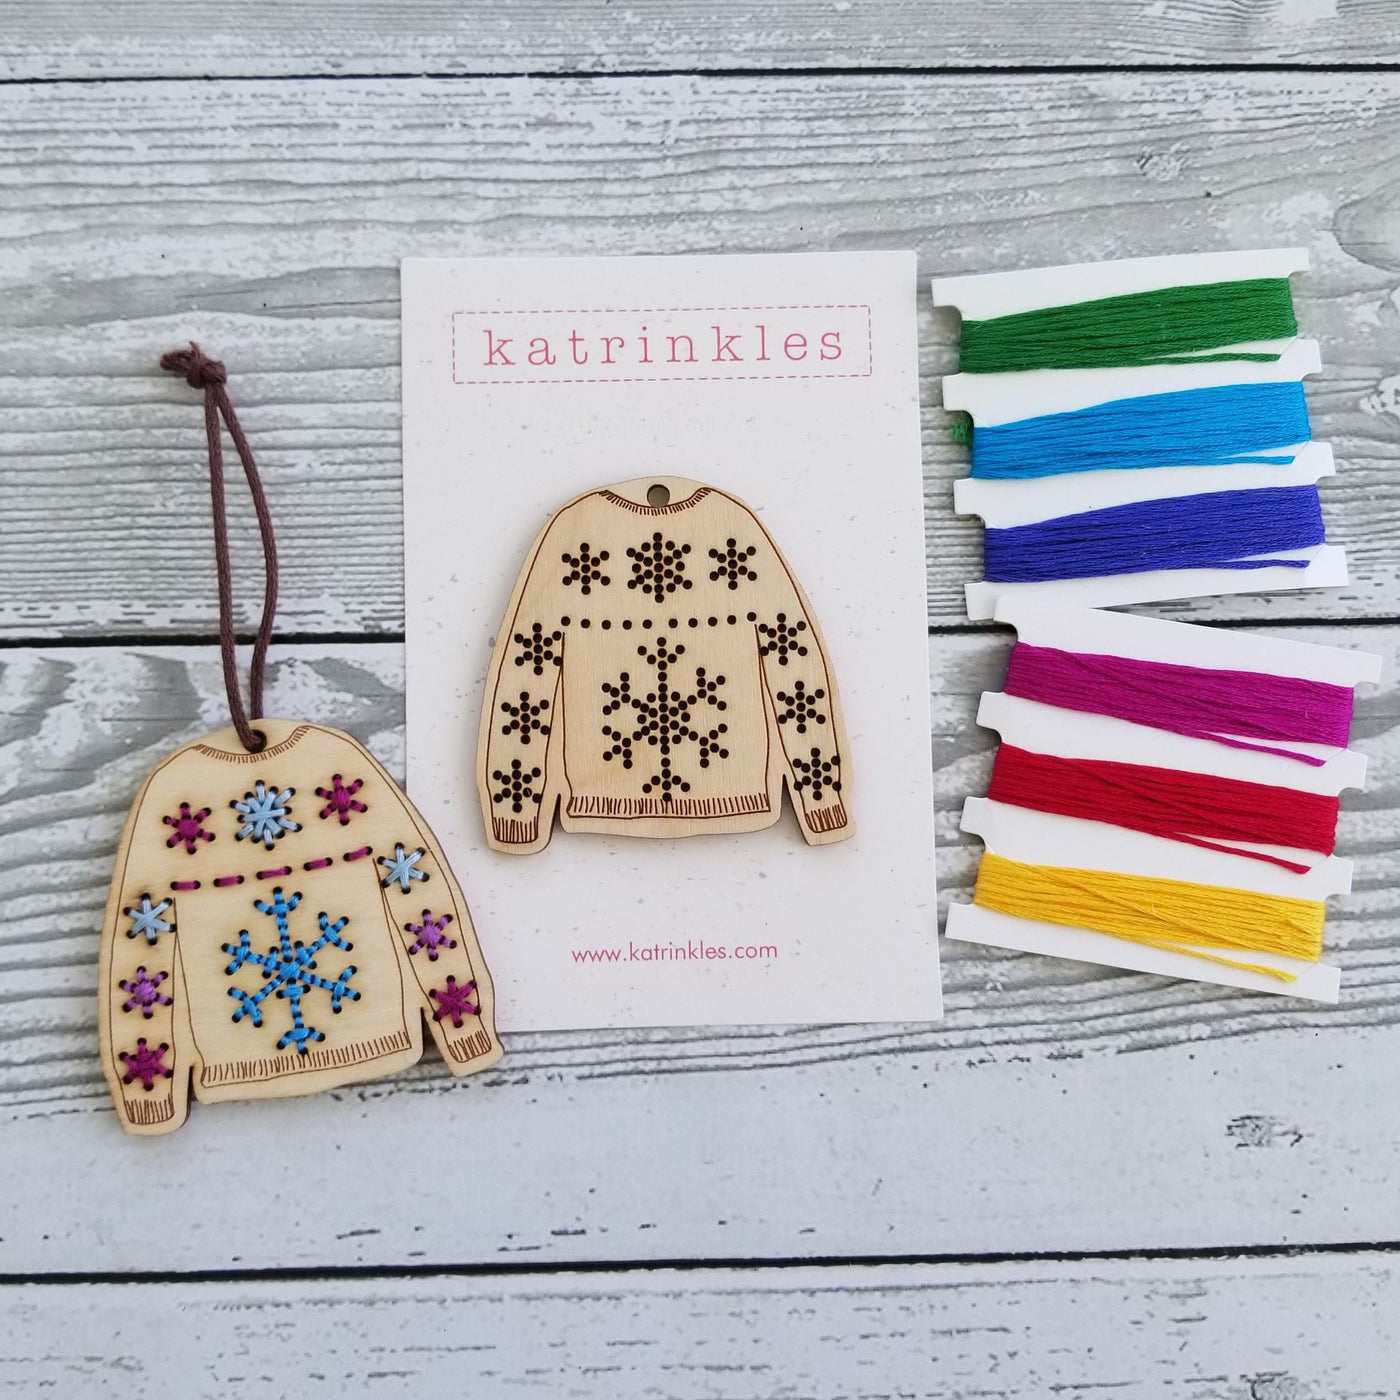 Stitchable Ornament Kit